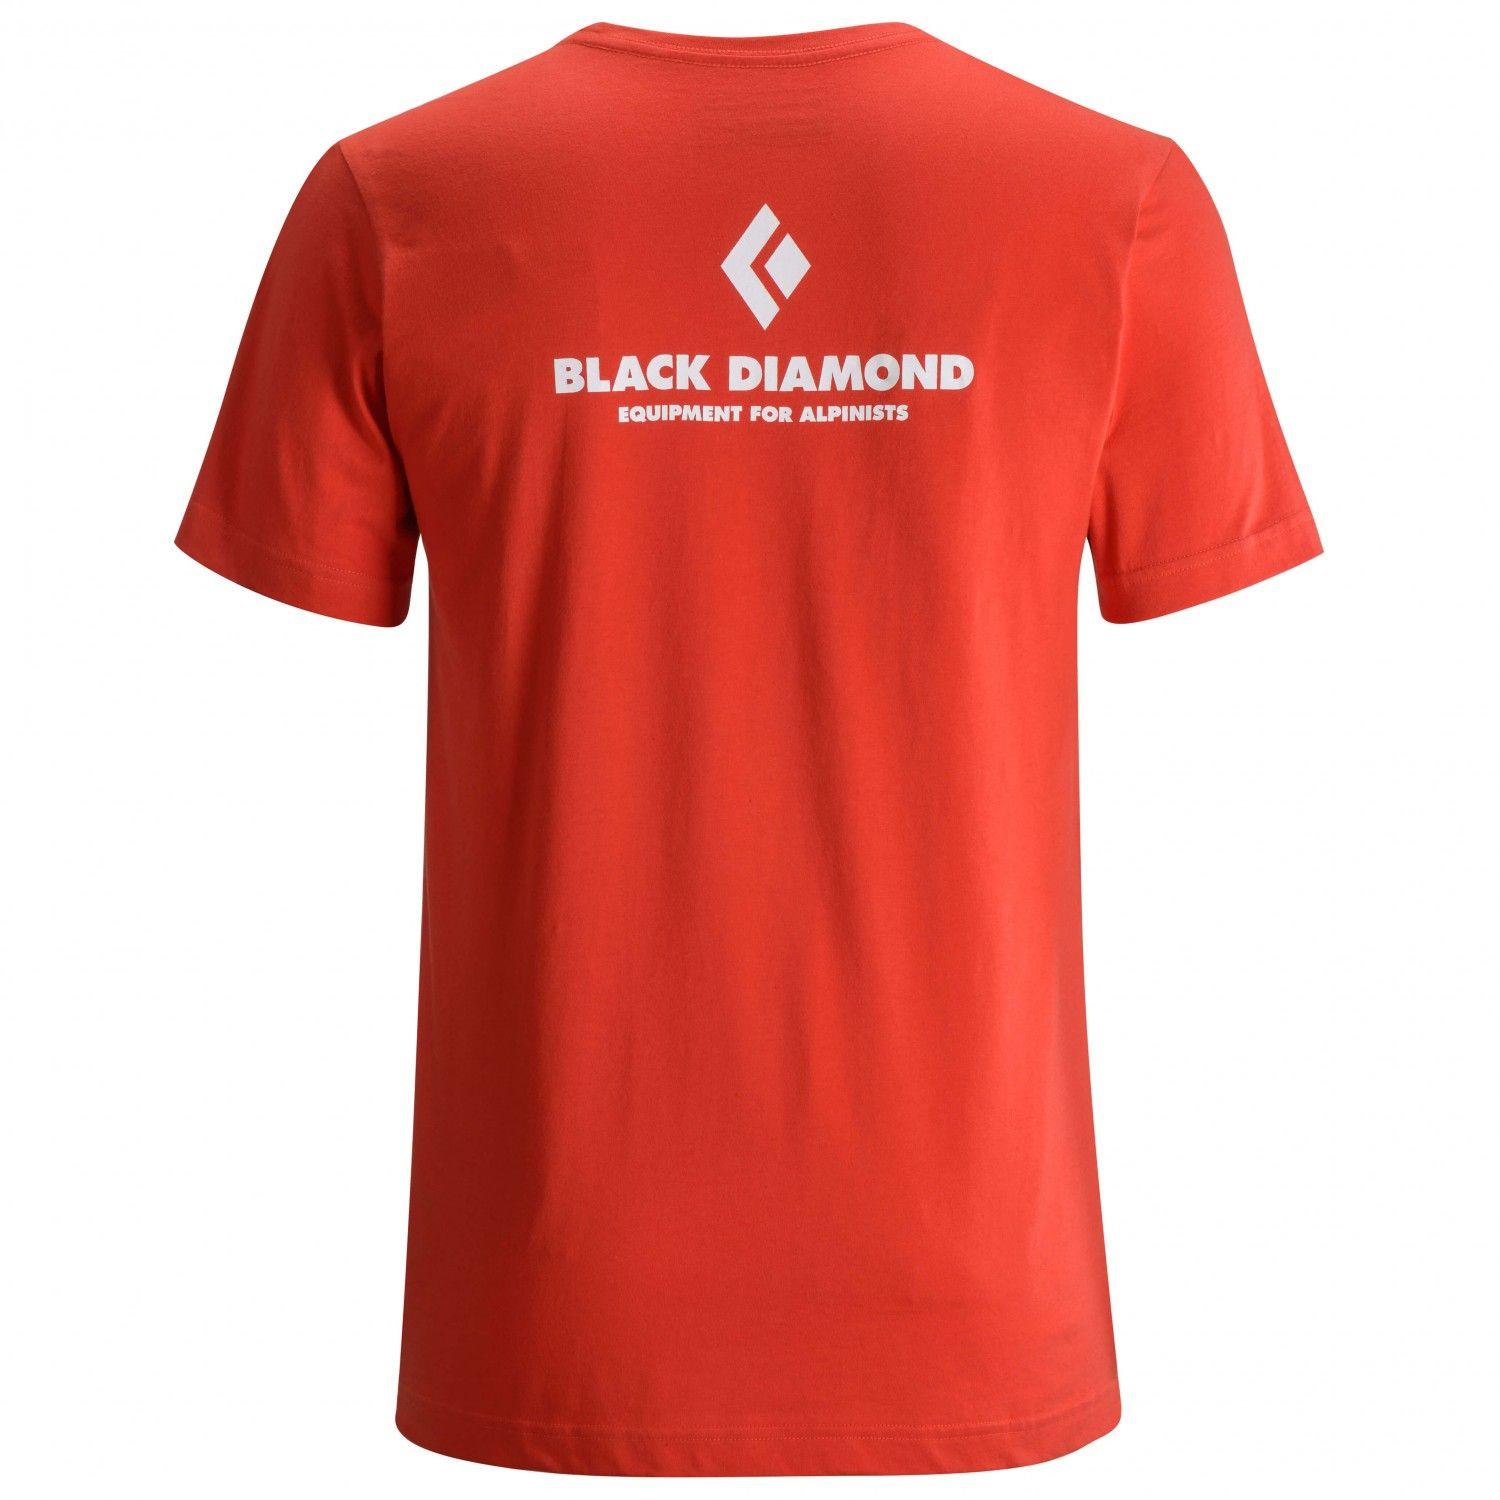 Red and Black Diamond Logo - Black Diamond S S Equipment For Alpinist Tee Shirt Men's. Buy